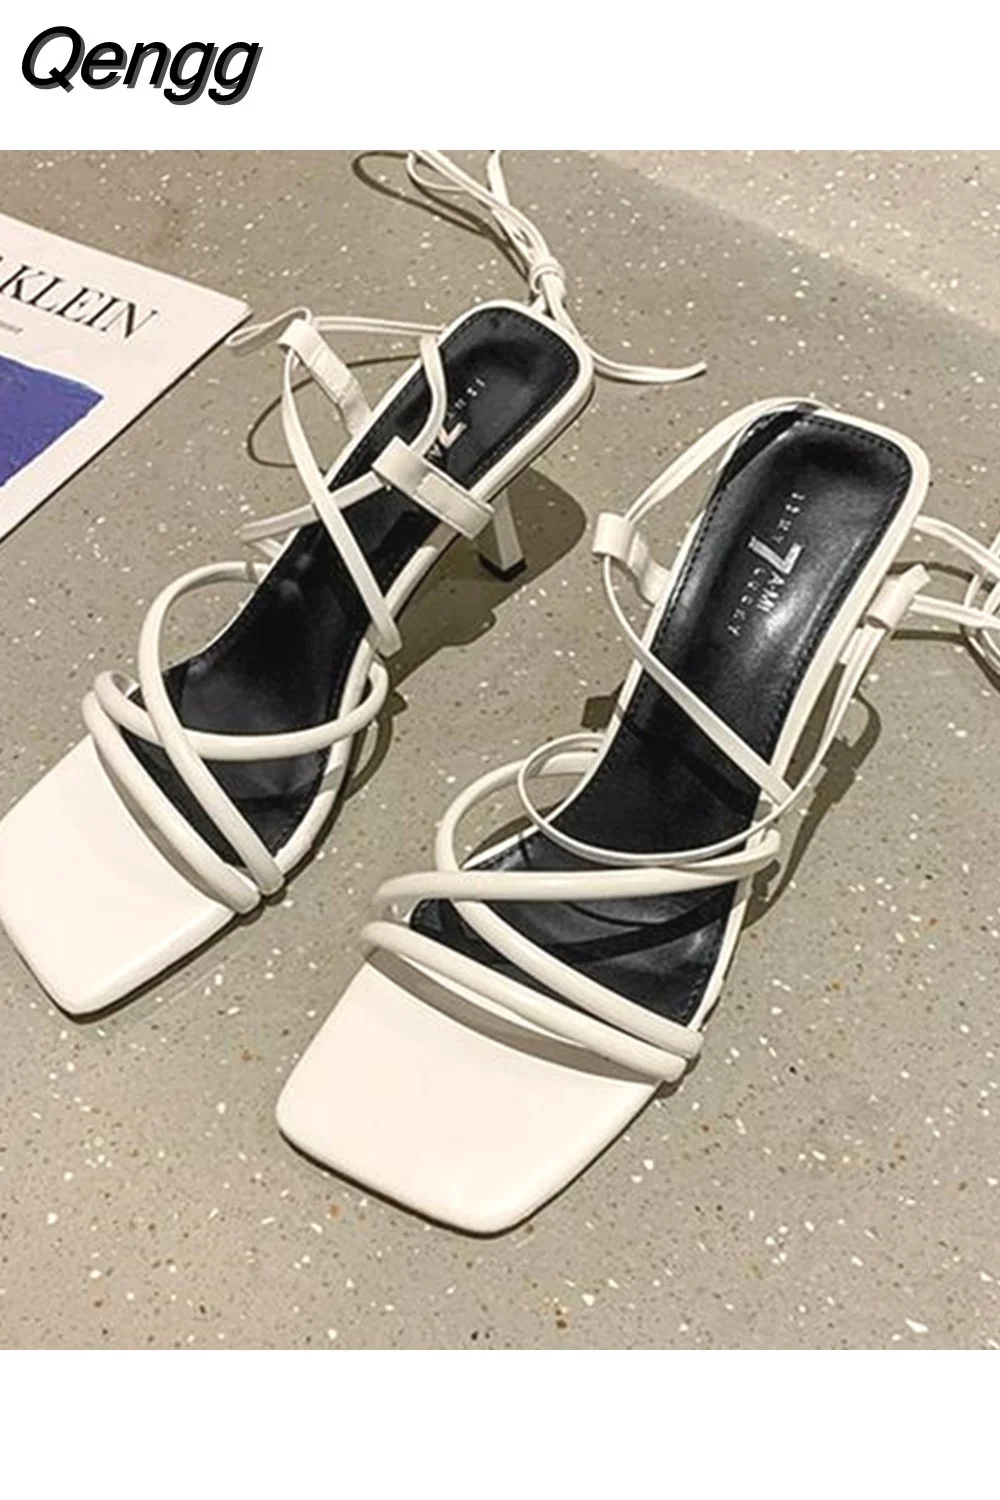 Qengg Sandals Female Shoe Espadrilles Platform High Heels Open Toe Cross All-Match Cross-Shoes New Girls Stiletto Lacquered High-